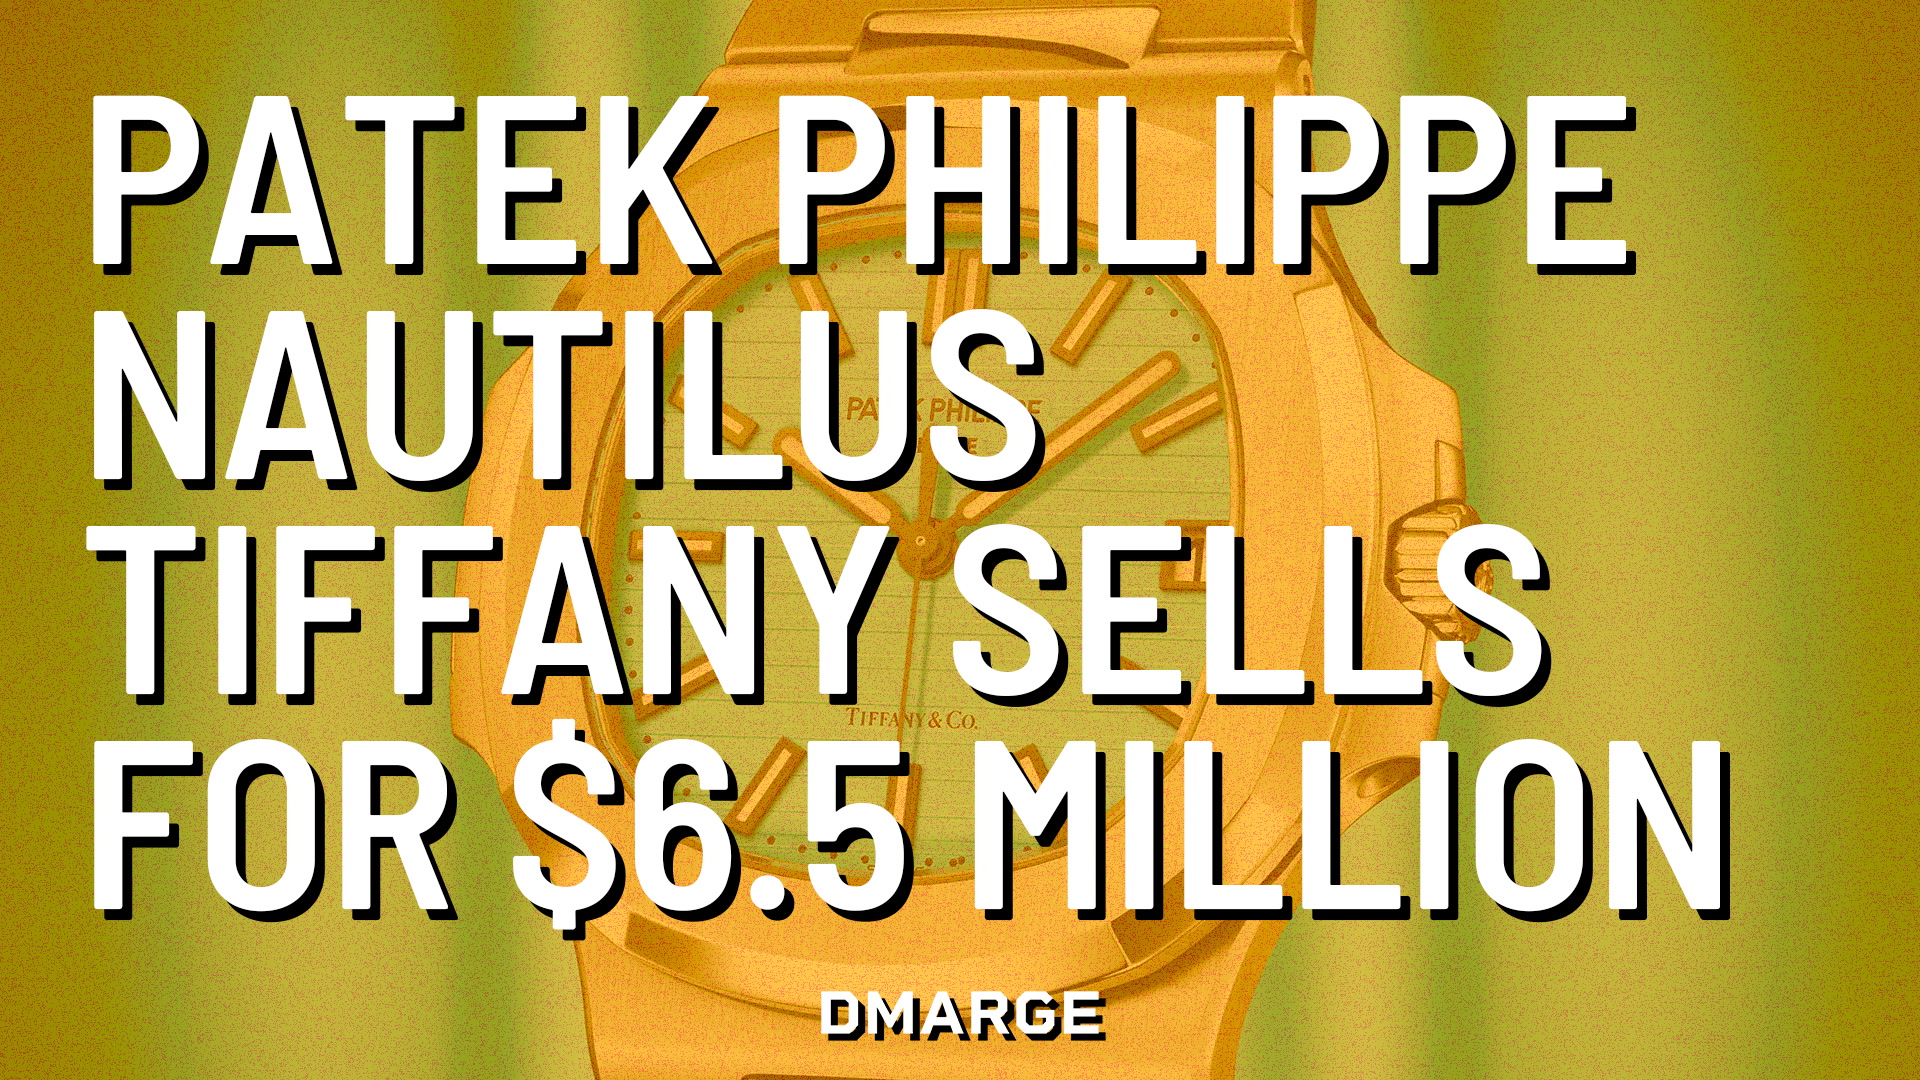 Tiffany dialed Patek Philippe Nautilus sells online for $6.5 million